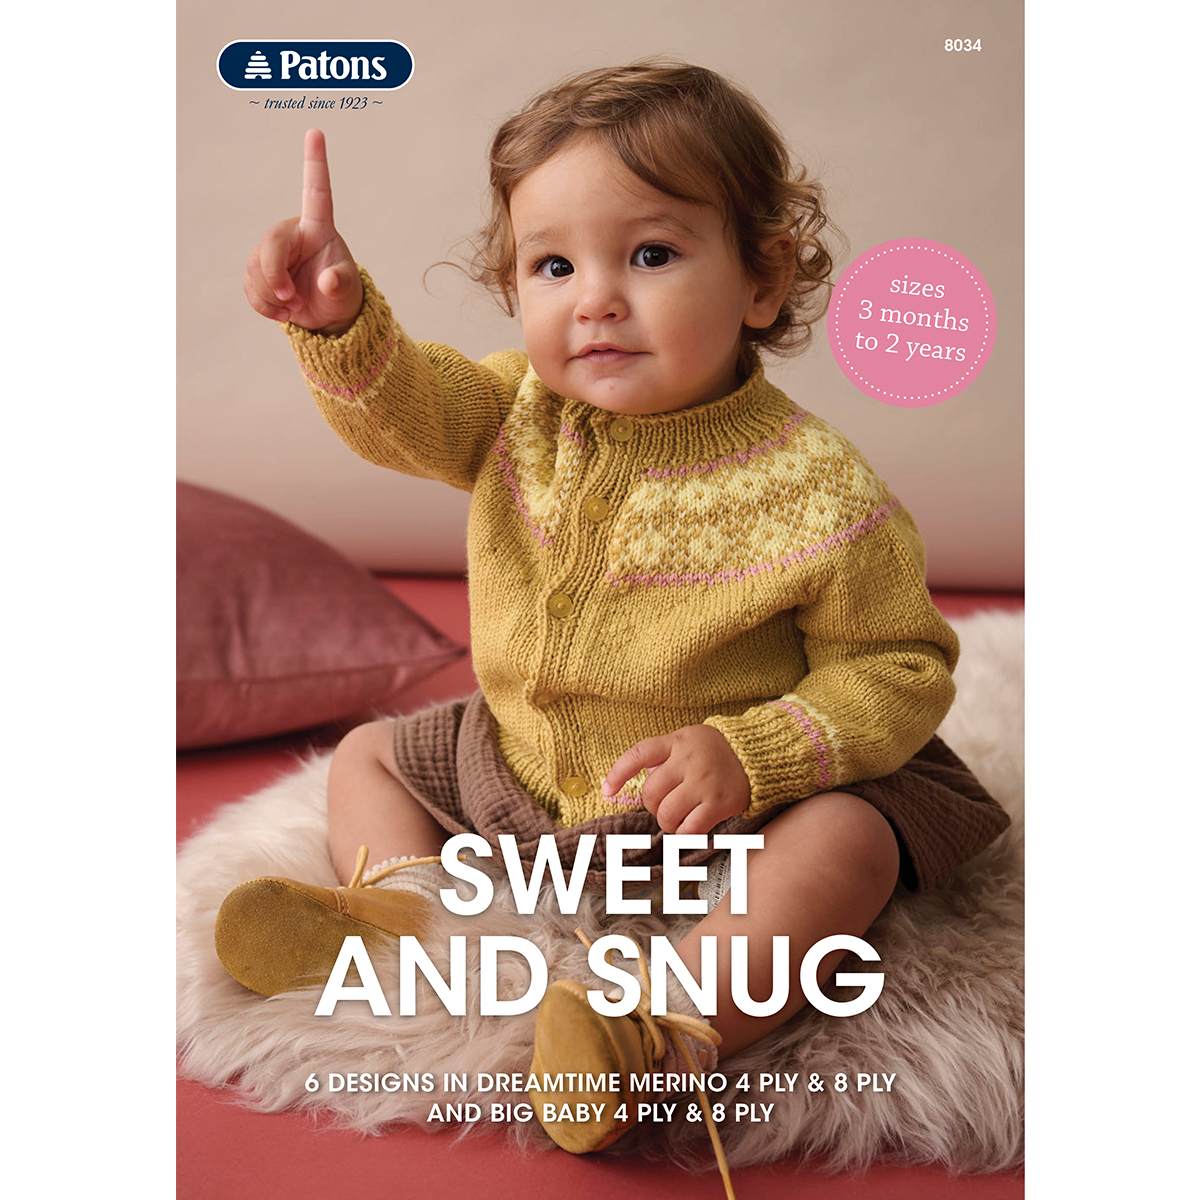 Sweet and snug - Heirloom, Patons, Cleckheaton - 8034